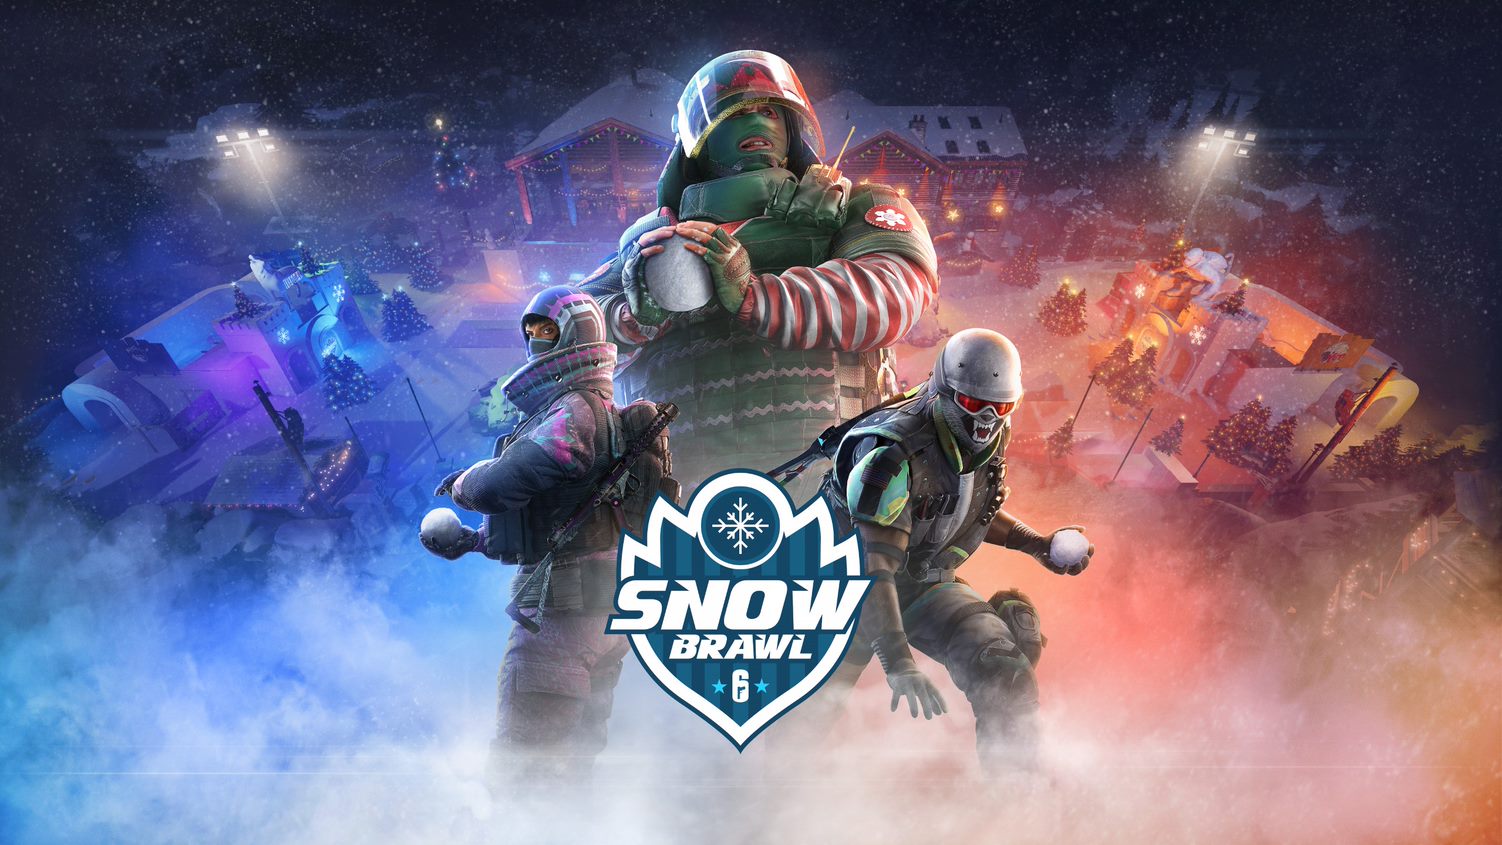 Tom Clancy’s Rainbow Six® Siege’s Wintry Snow Brawl Event Launches Today